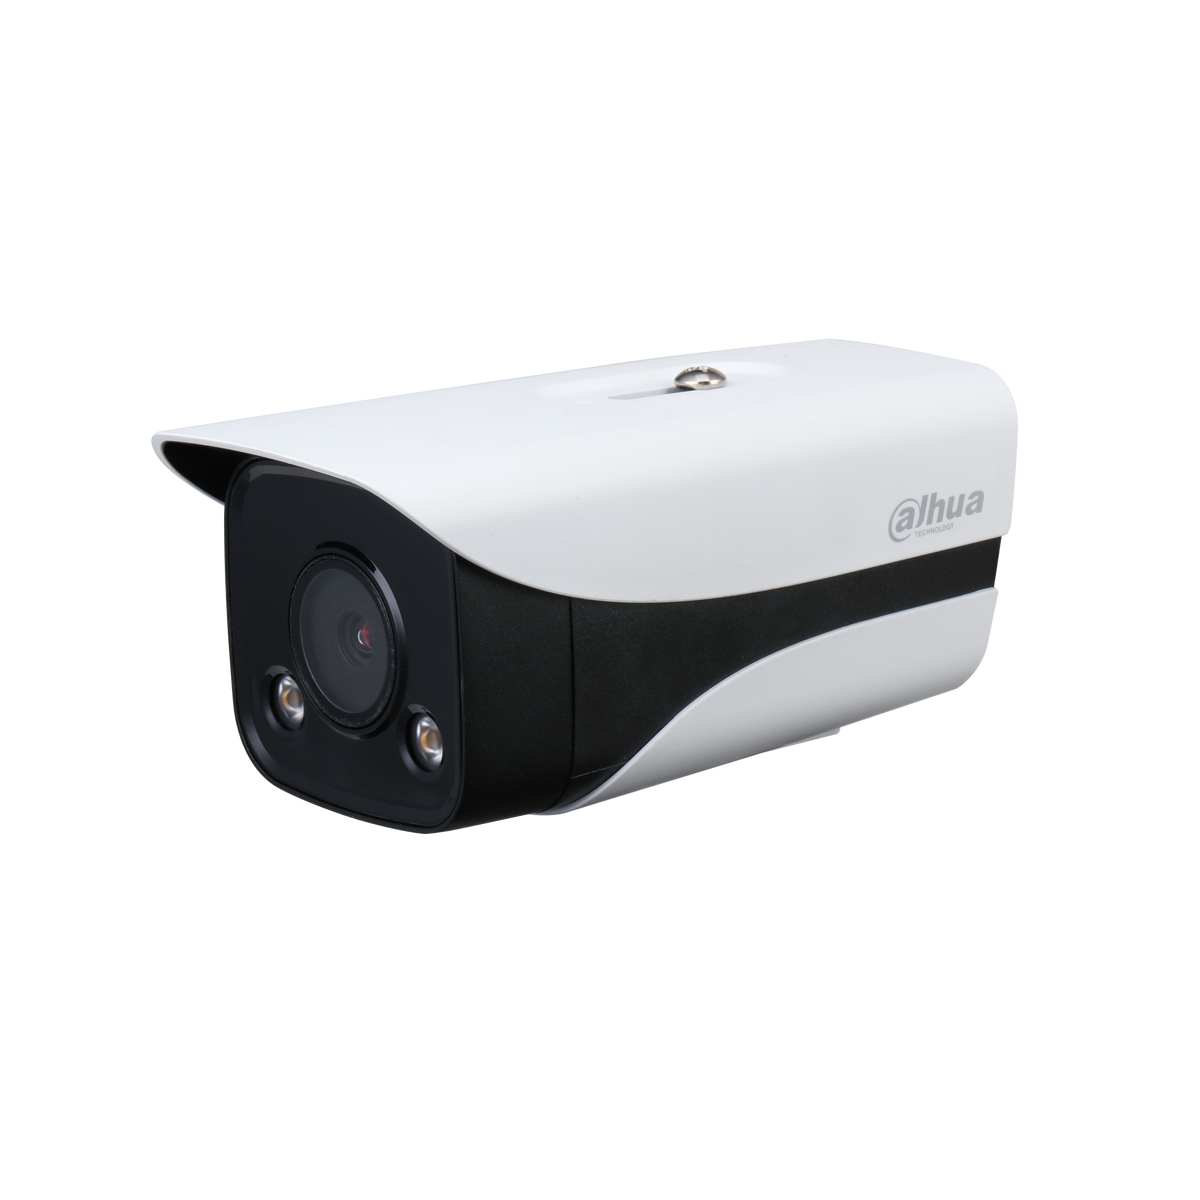 DAHUA IPC-HFW2230M-AS-LED-B 2MP Lite Full-color Fixed-focal Bullet Network Camera